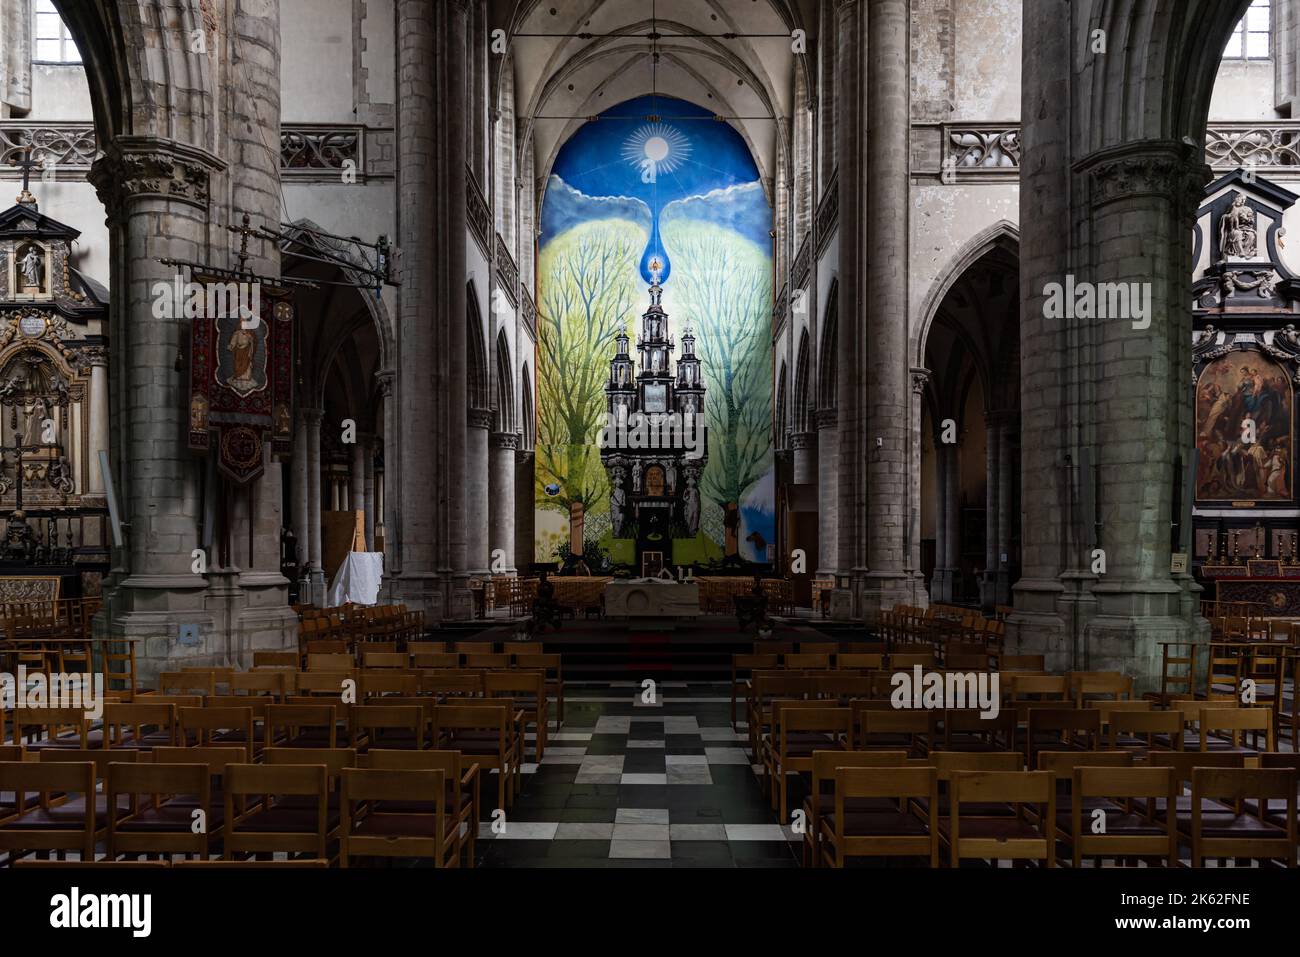 Aalst, East Flanders Region, Belgium - 07 15 2021 - Gothic interior design of the Stock Photo